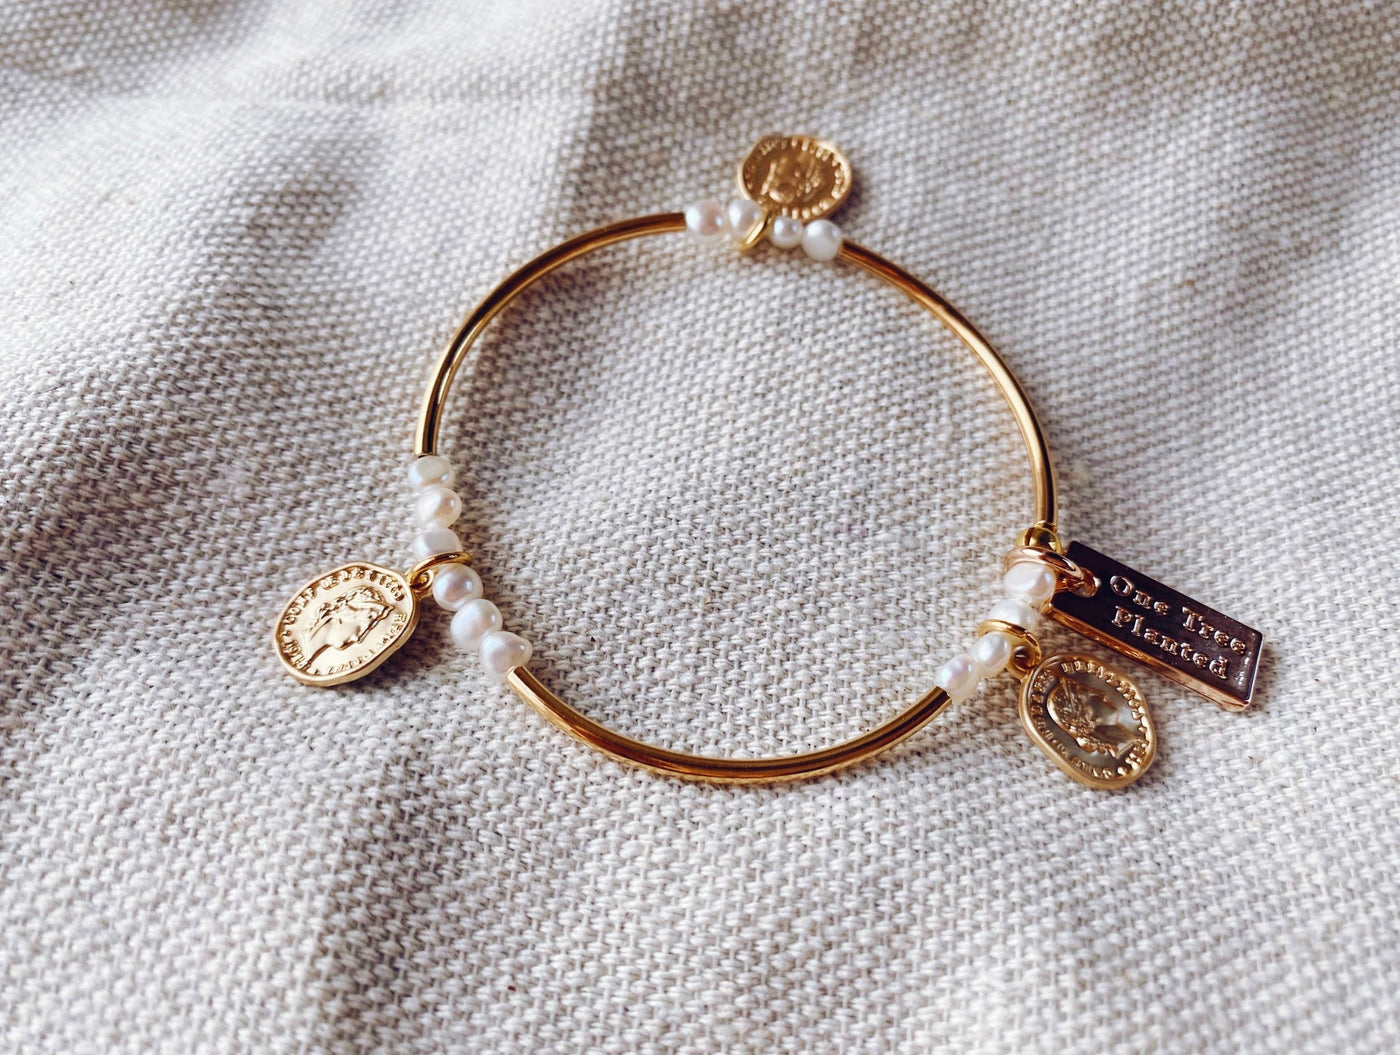 Hepburn Coin Bracelet Collection